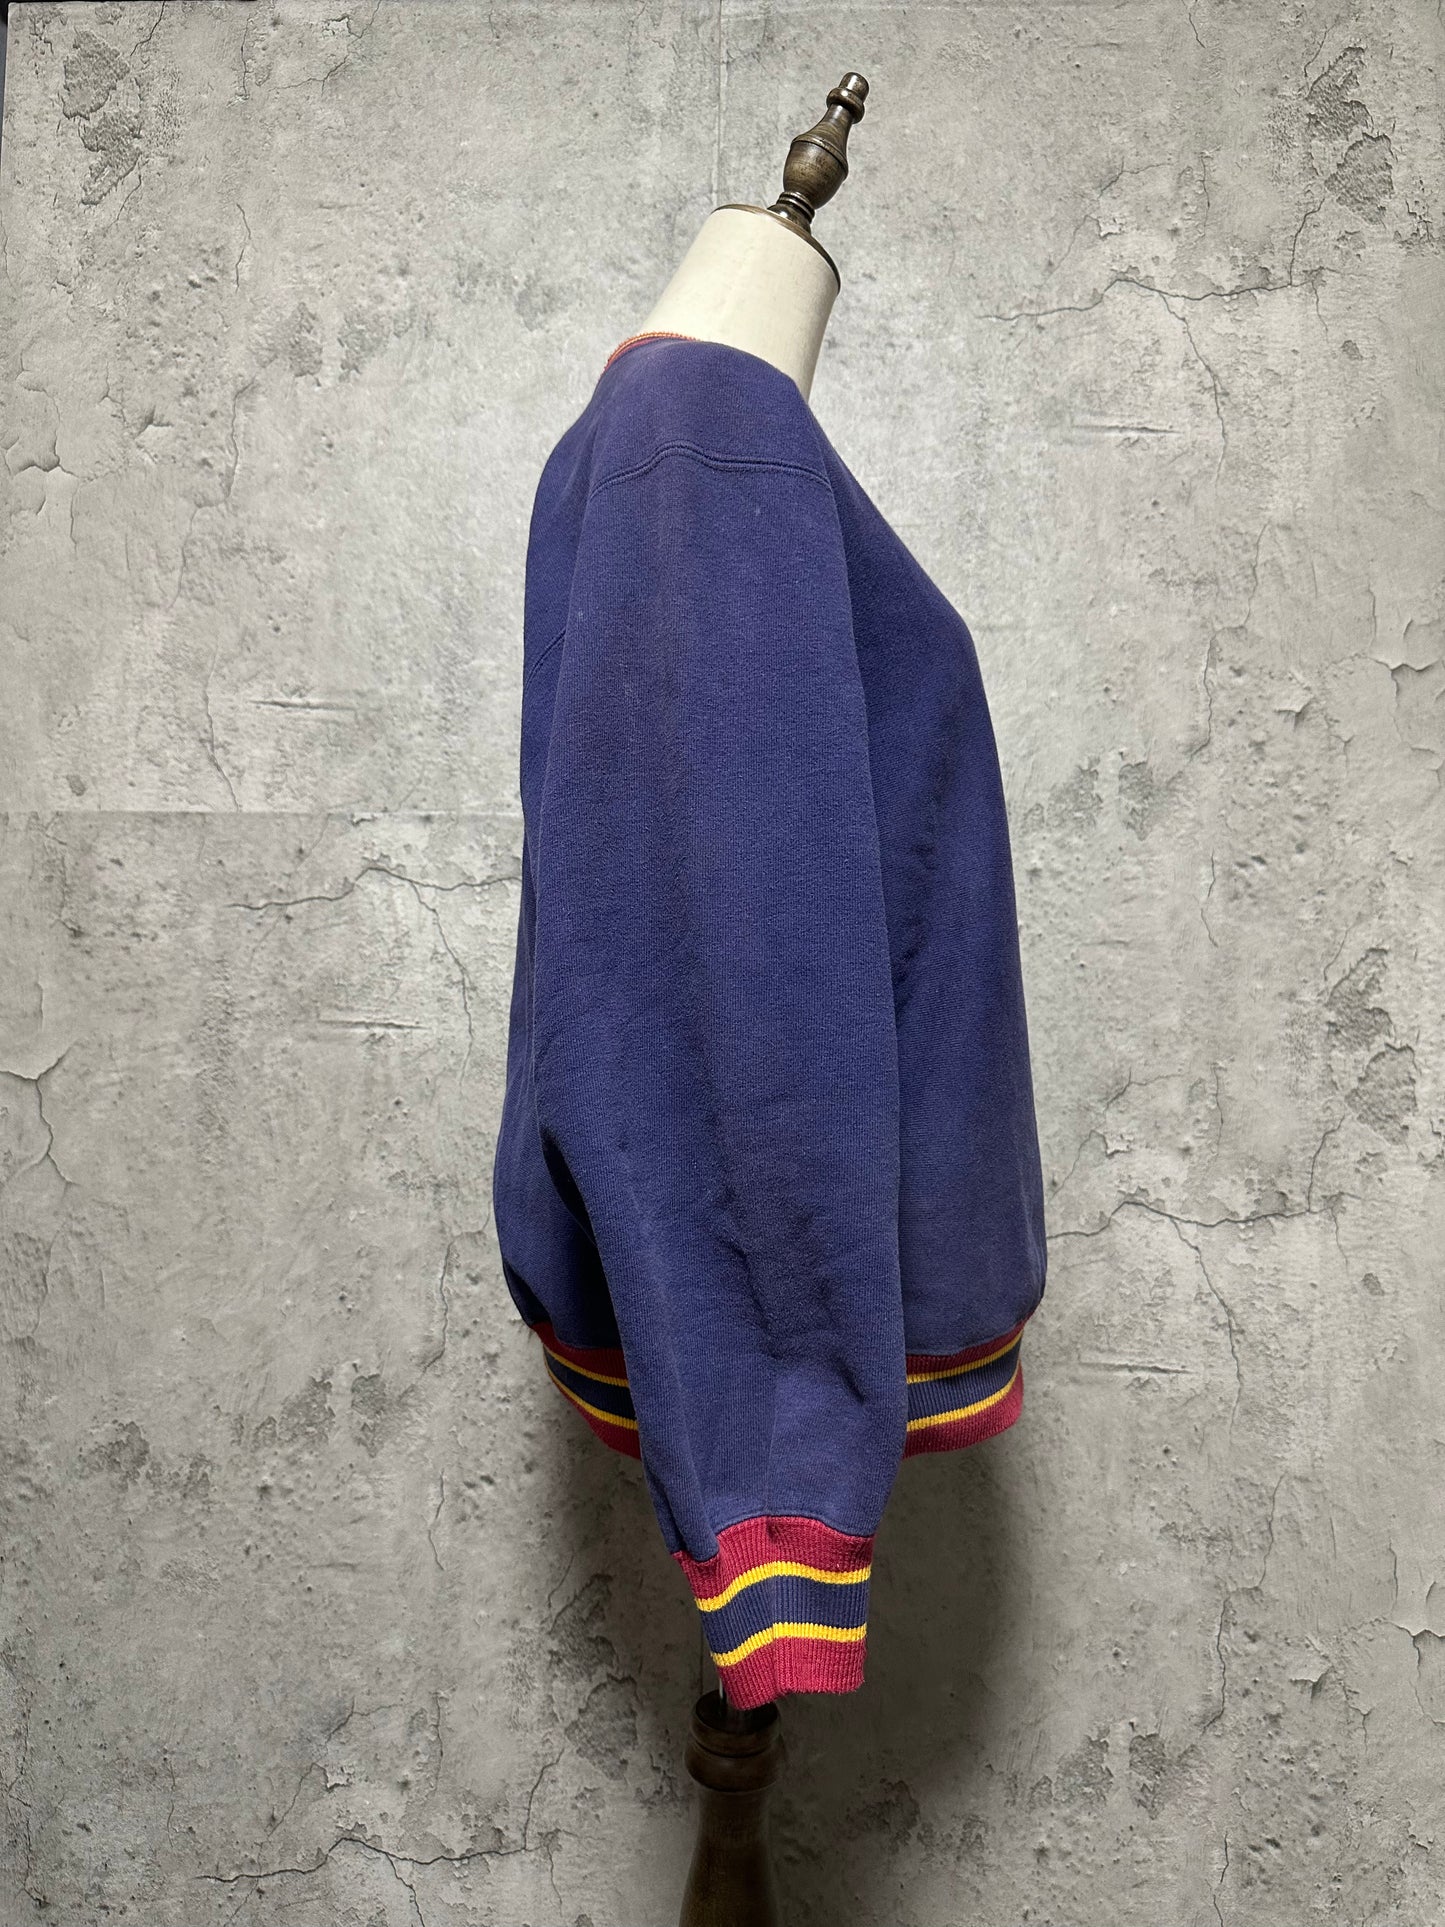 USA Champion reverse weave sweatshirt vintage 90s